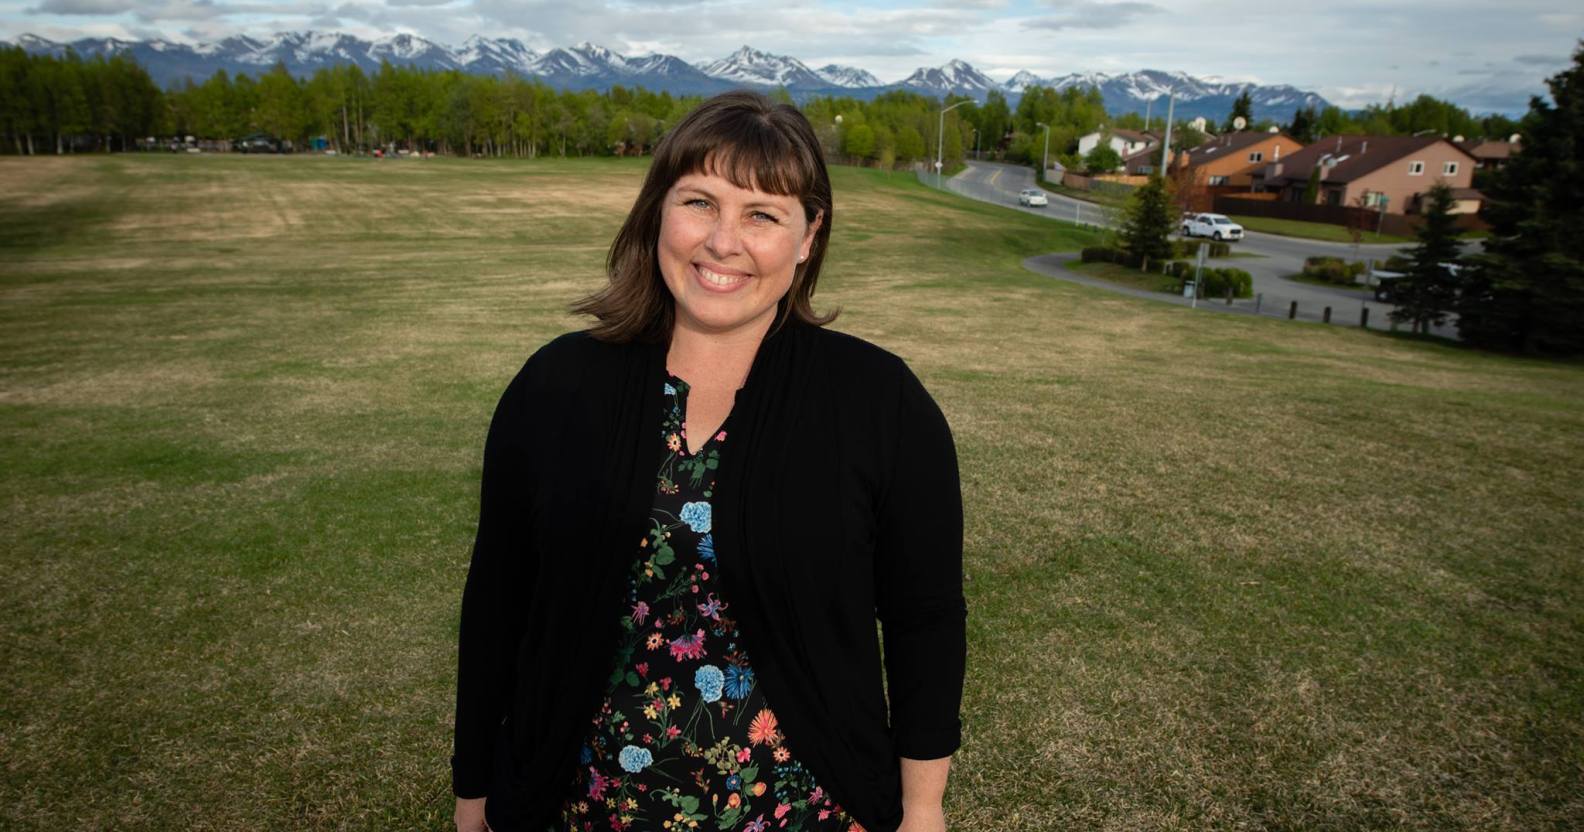 Austin Quinn-Davidson, the new acting mayor of Anchorage, Alaska